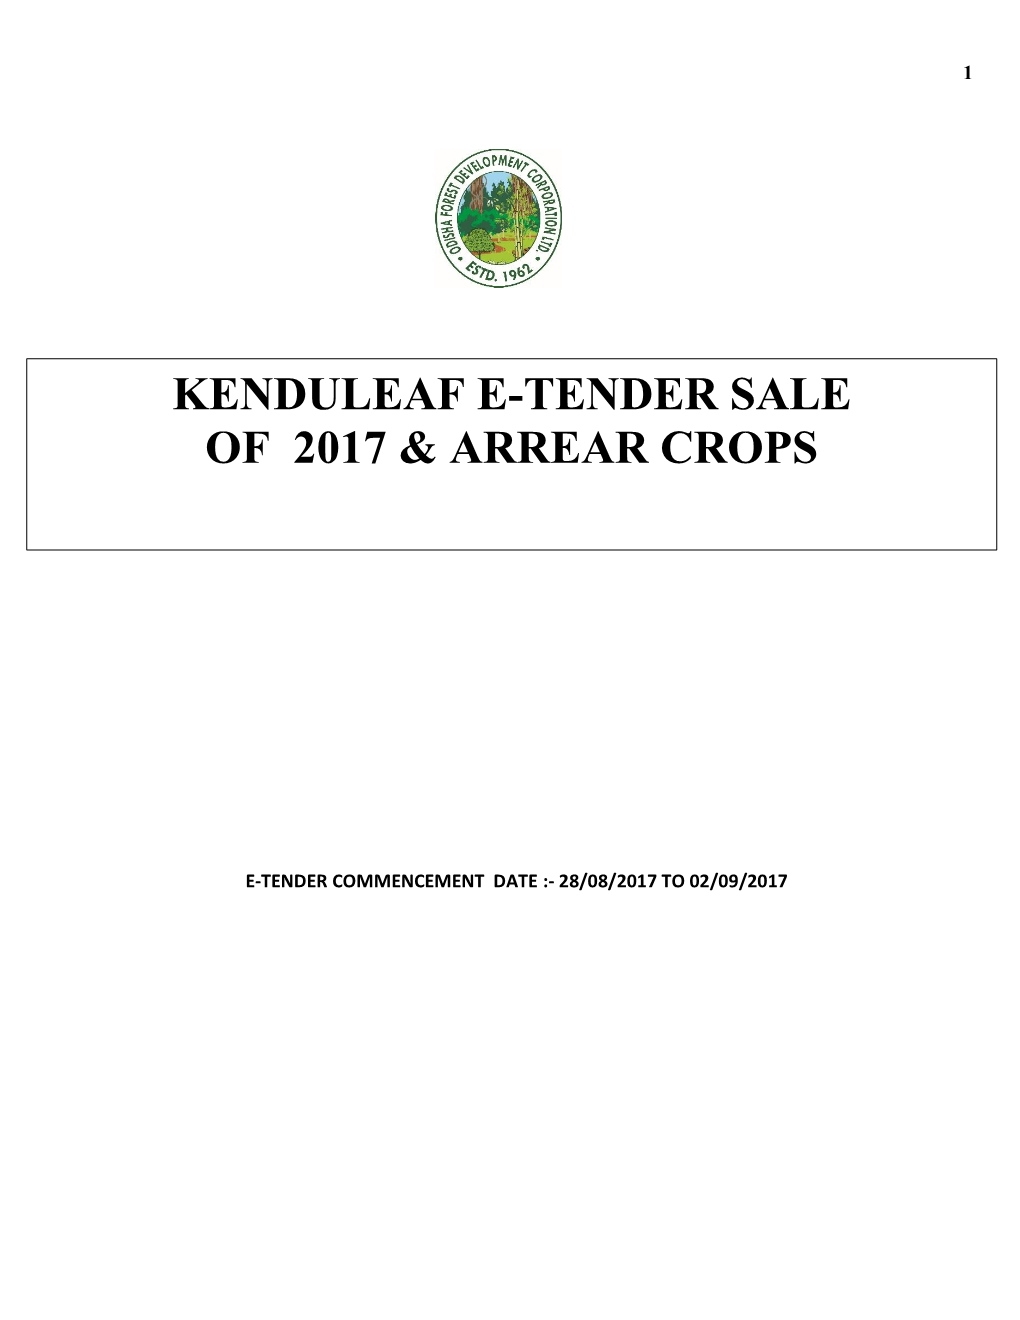 Kenduleaf E-Tender Sale of 2017 & Arrear Crops